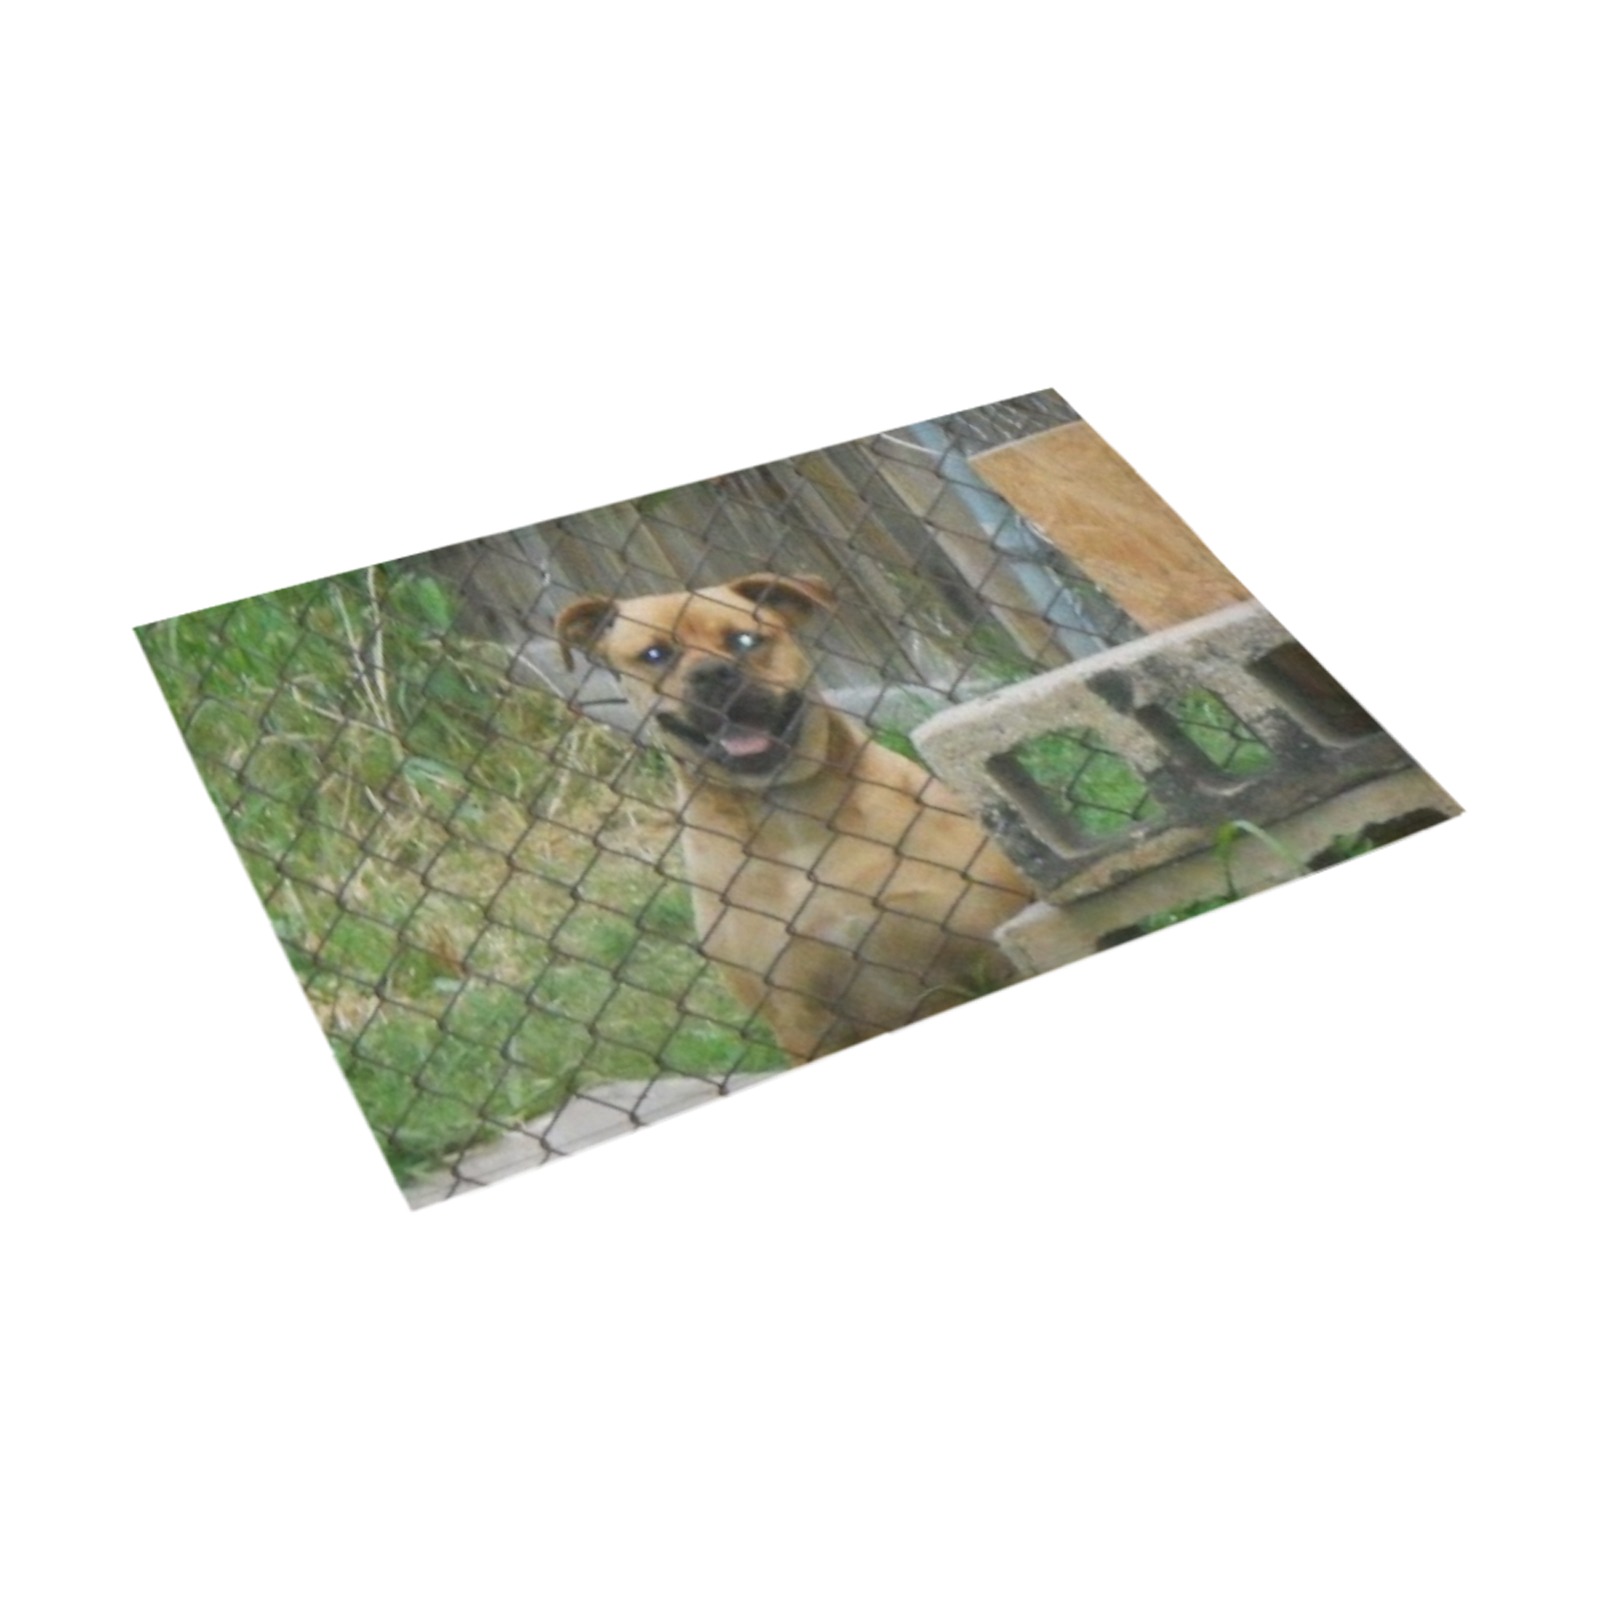 A Smiling Dog Azalea Doormat 30" x 18" (Sponge Material)